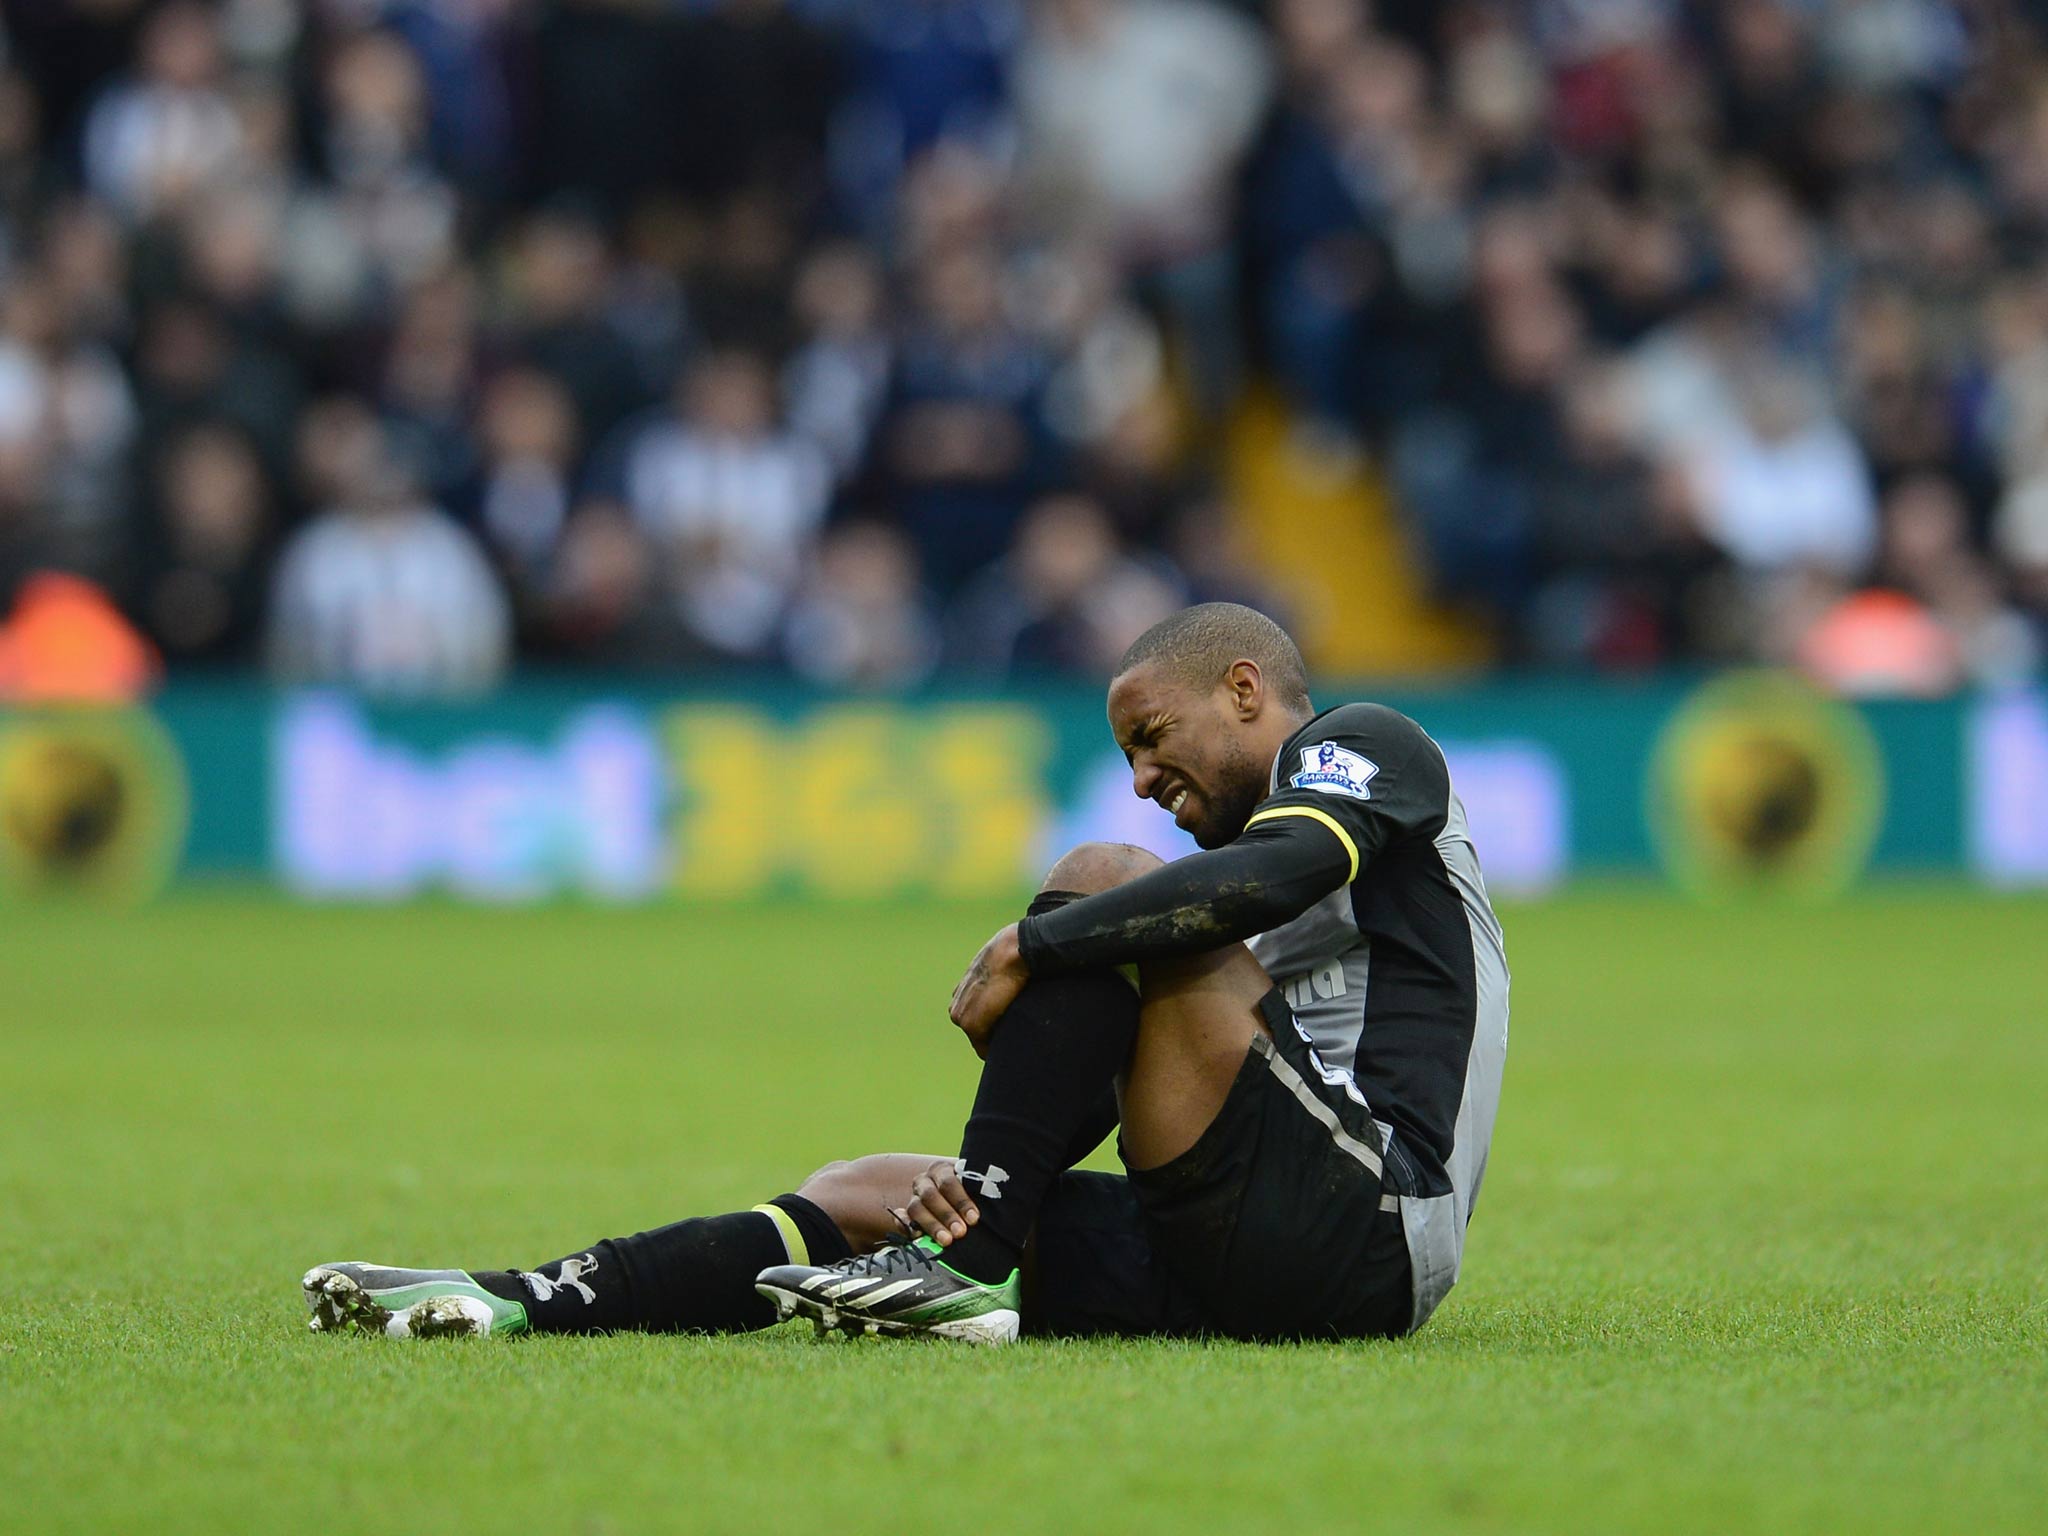 Tottenham striker Jermain Defoe picks up an injury in the Premier League match against West Brom